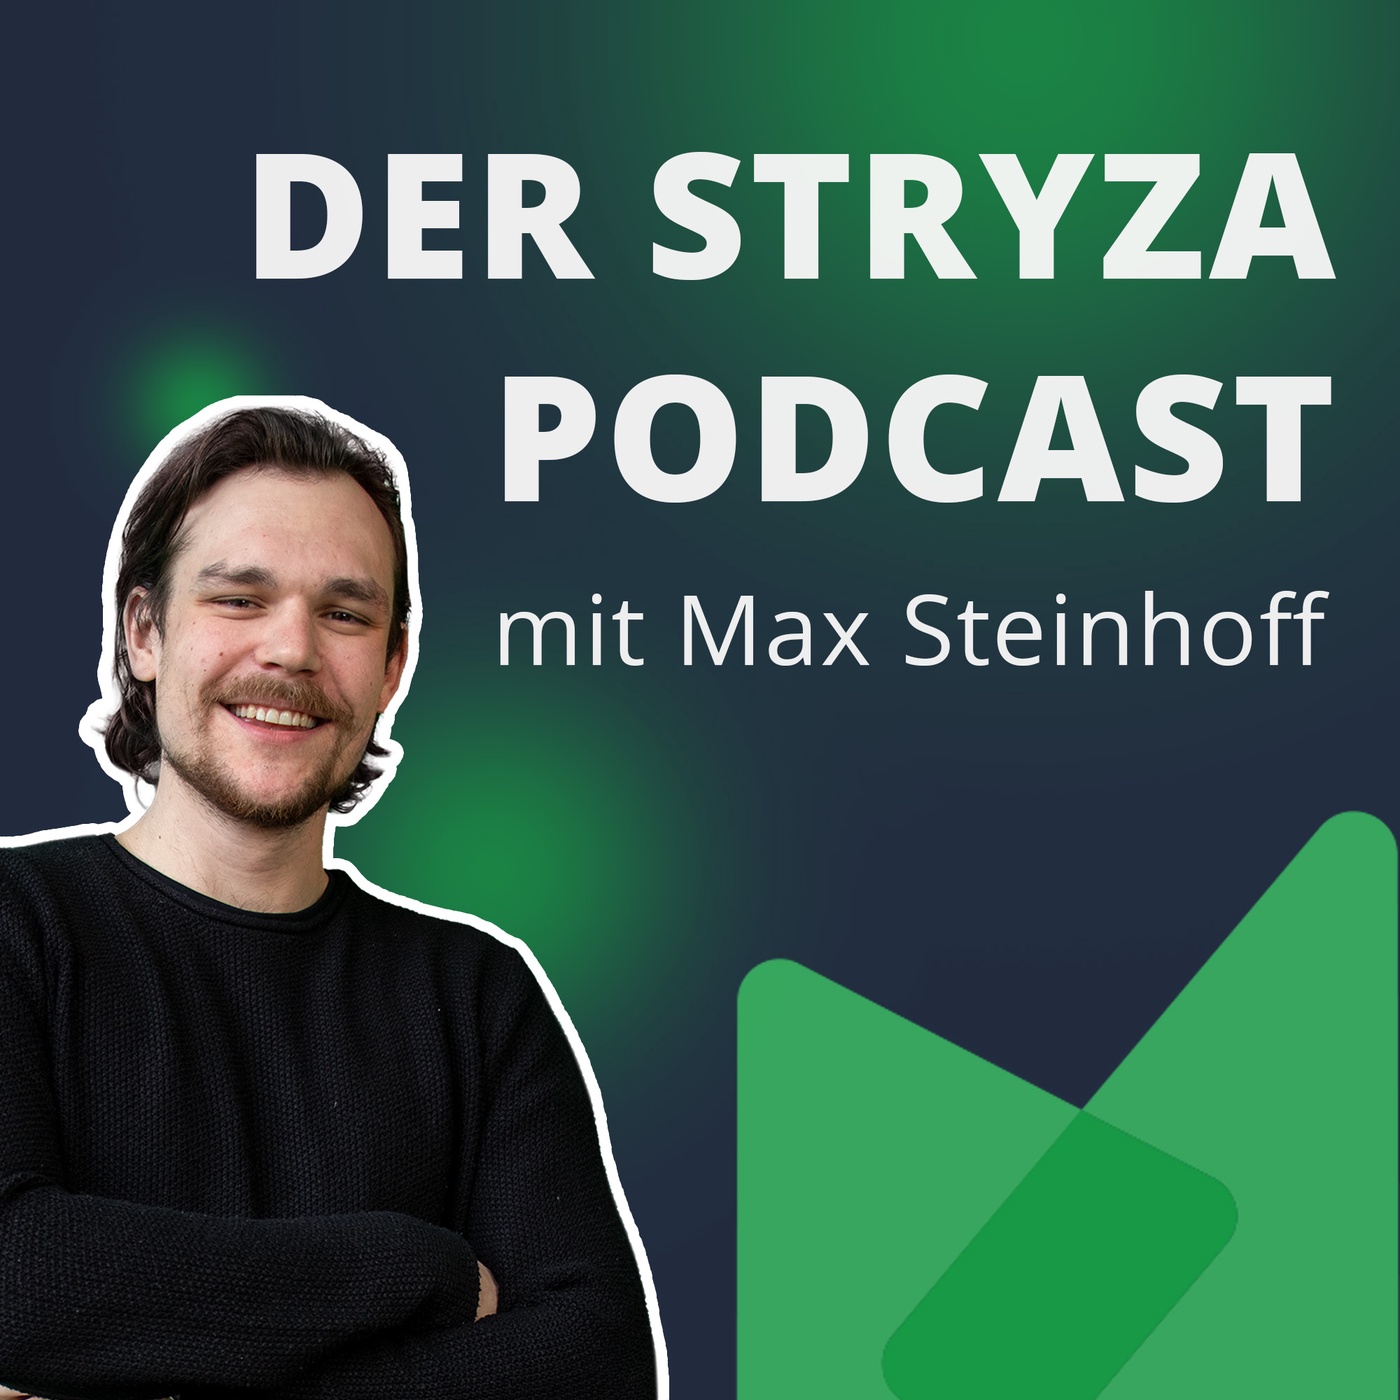 Der STRYZA Podcast